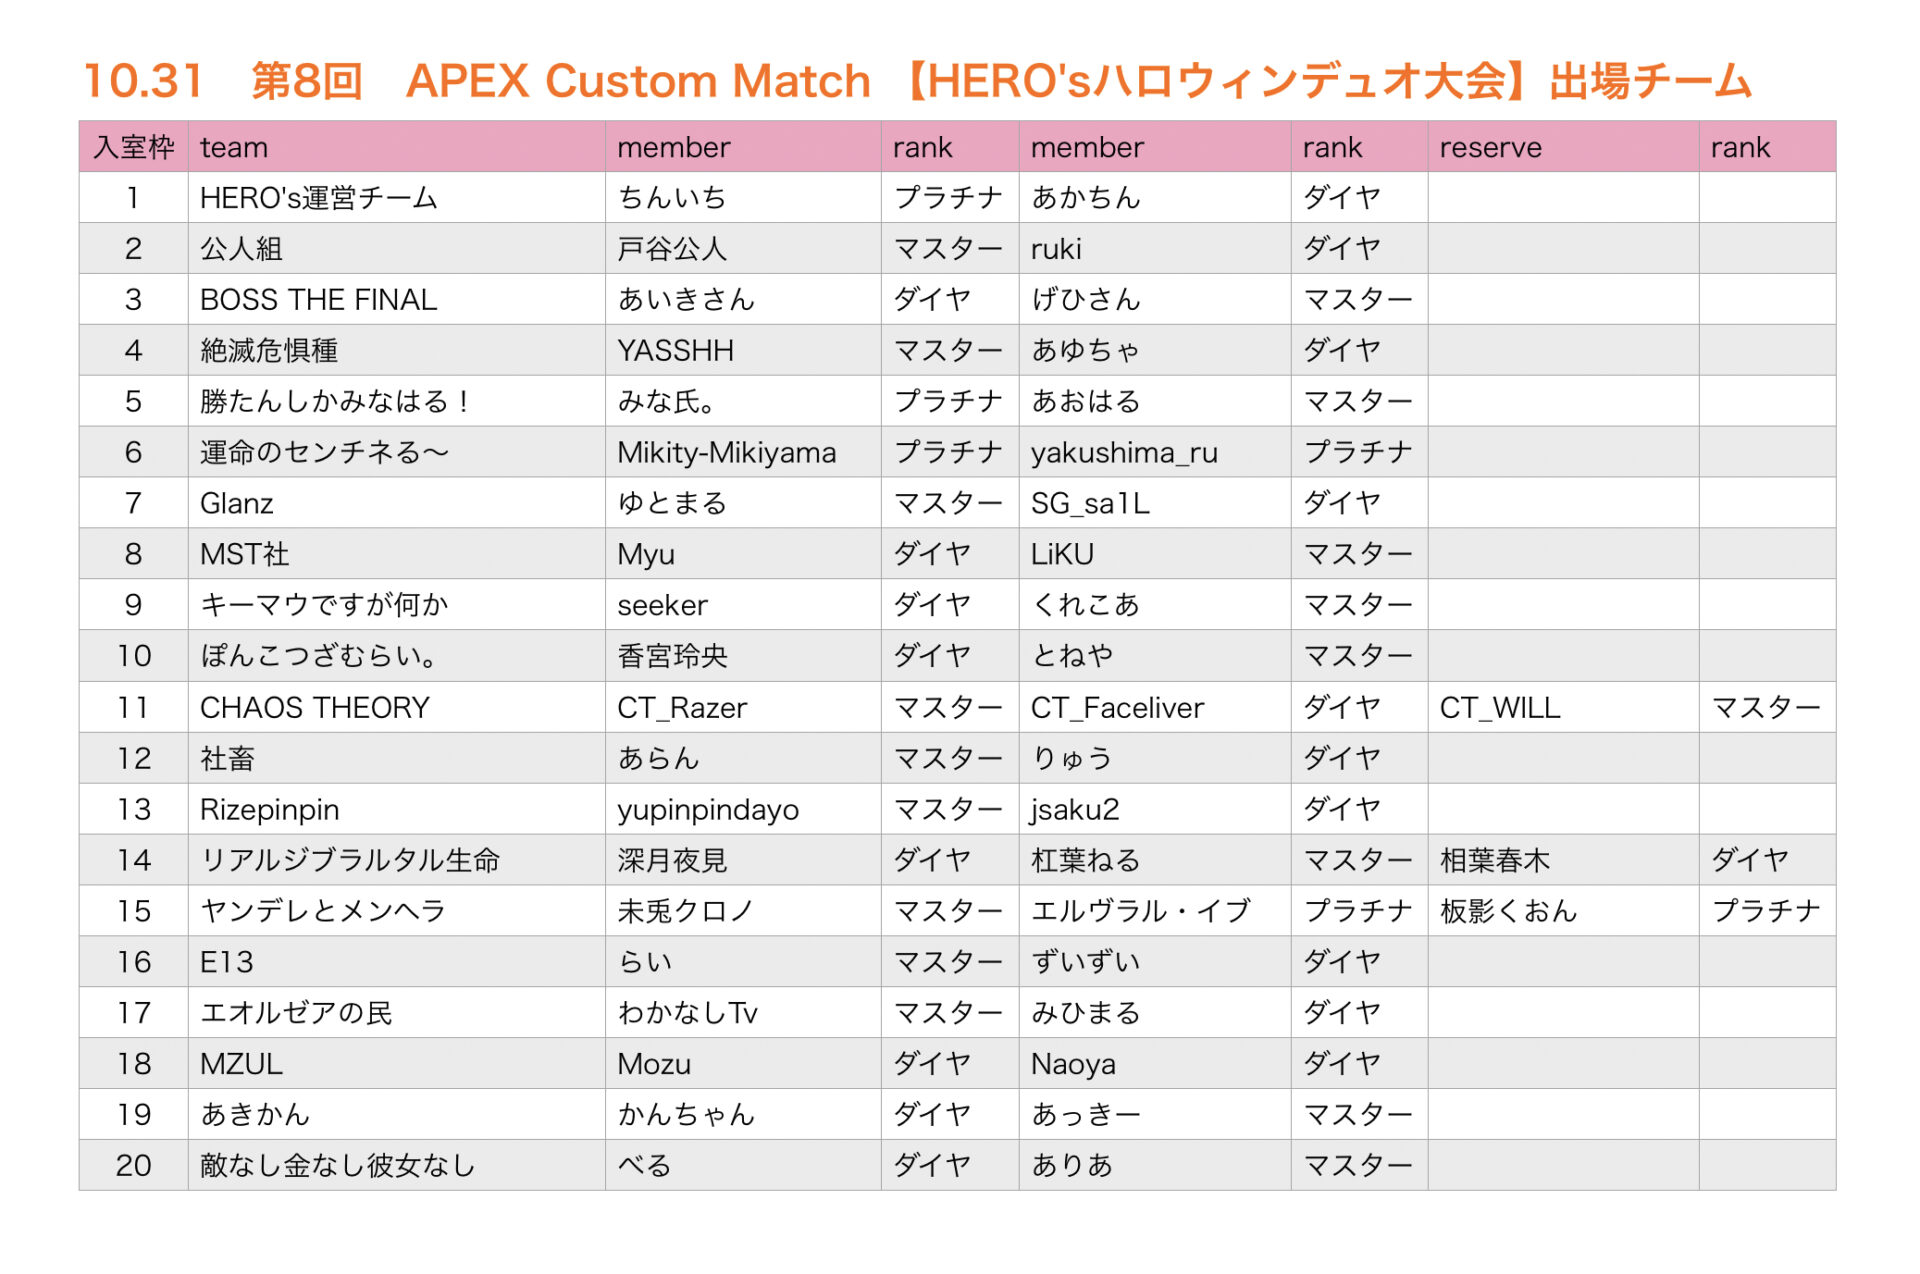 APEX Custom Match HERO’sハロウィンデュオ大会